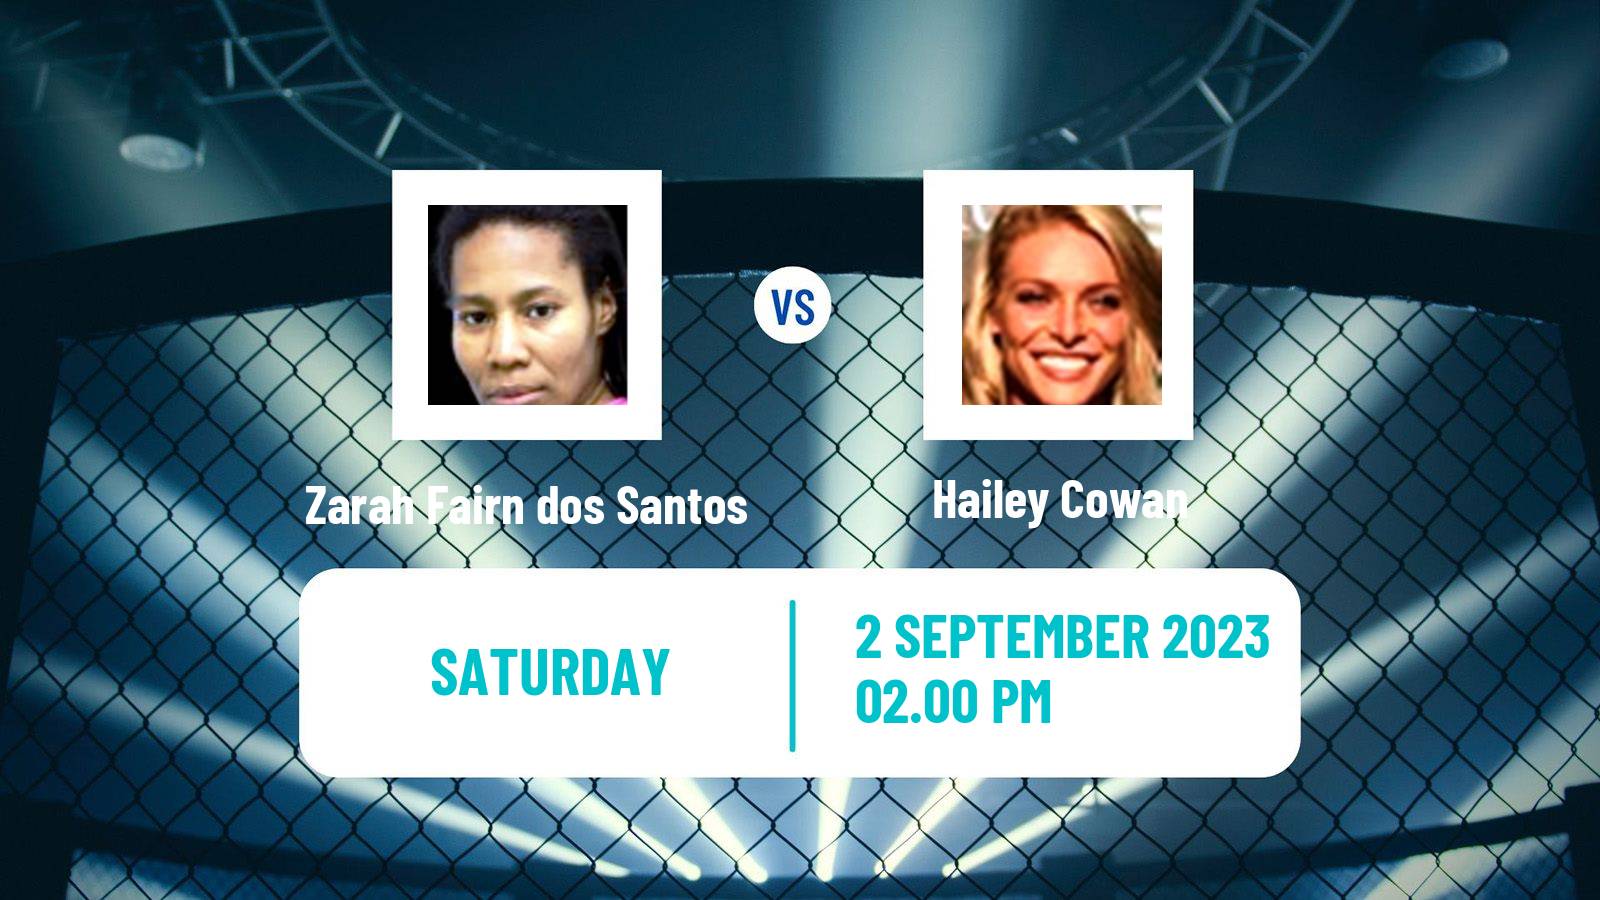 MMA Bantamweight UFC Women Zarah Fairn dos Santos - Hailey Cowan